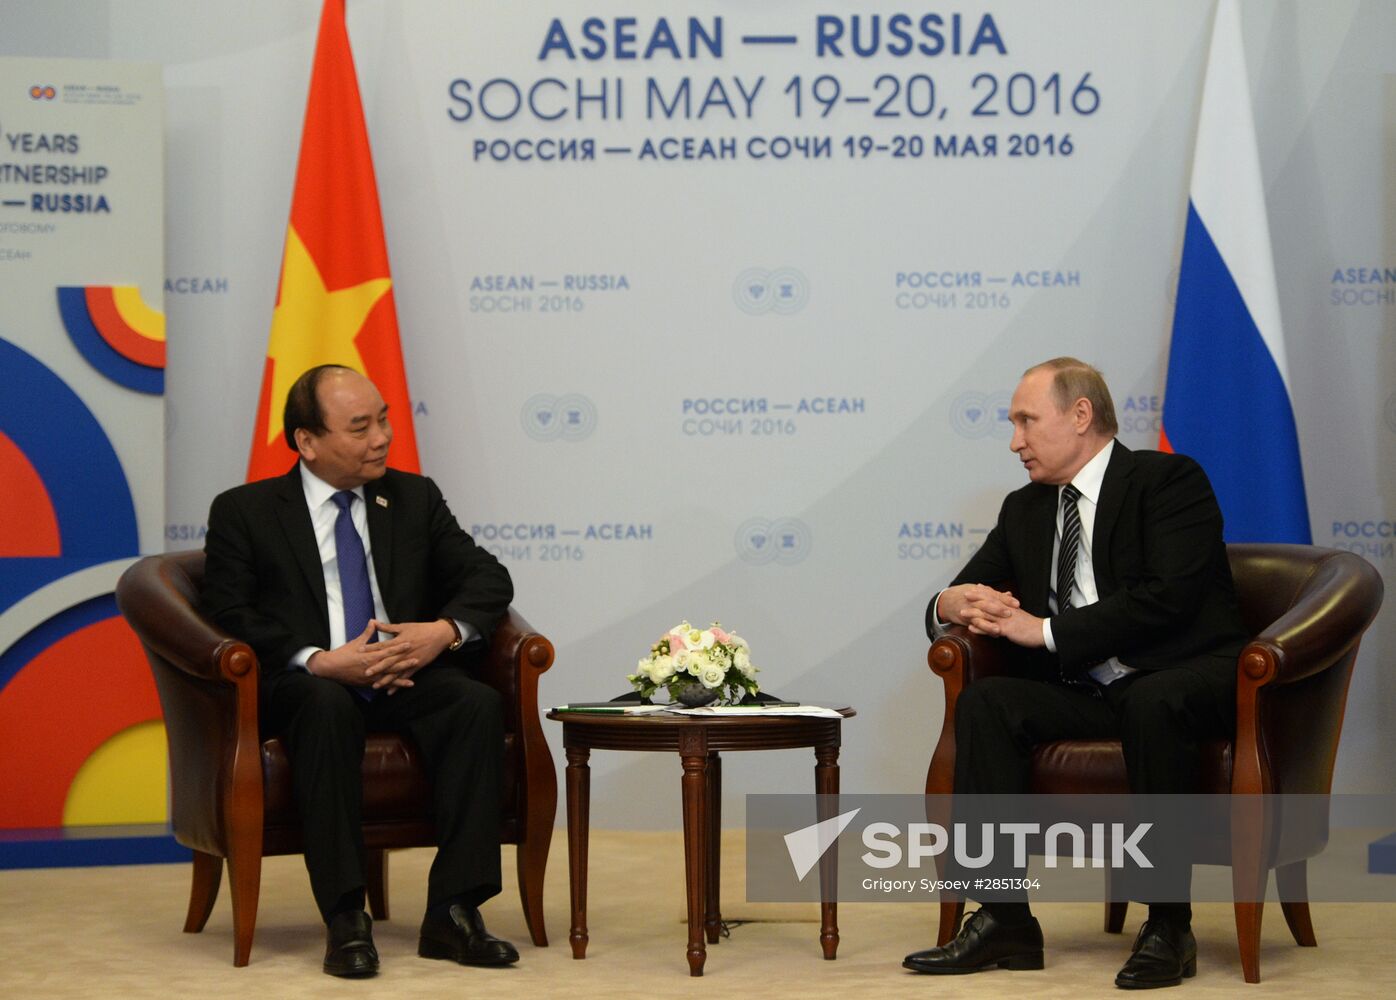 Russian President Vladimir Putin's bilateral meeting with Prime Minister of Vietnam Nguyen Xuan Phuc